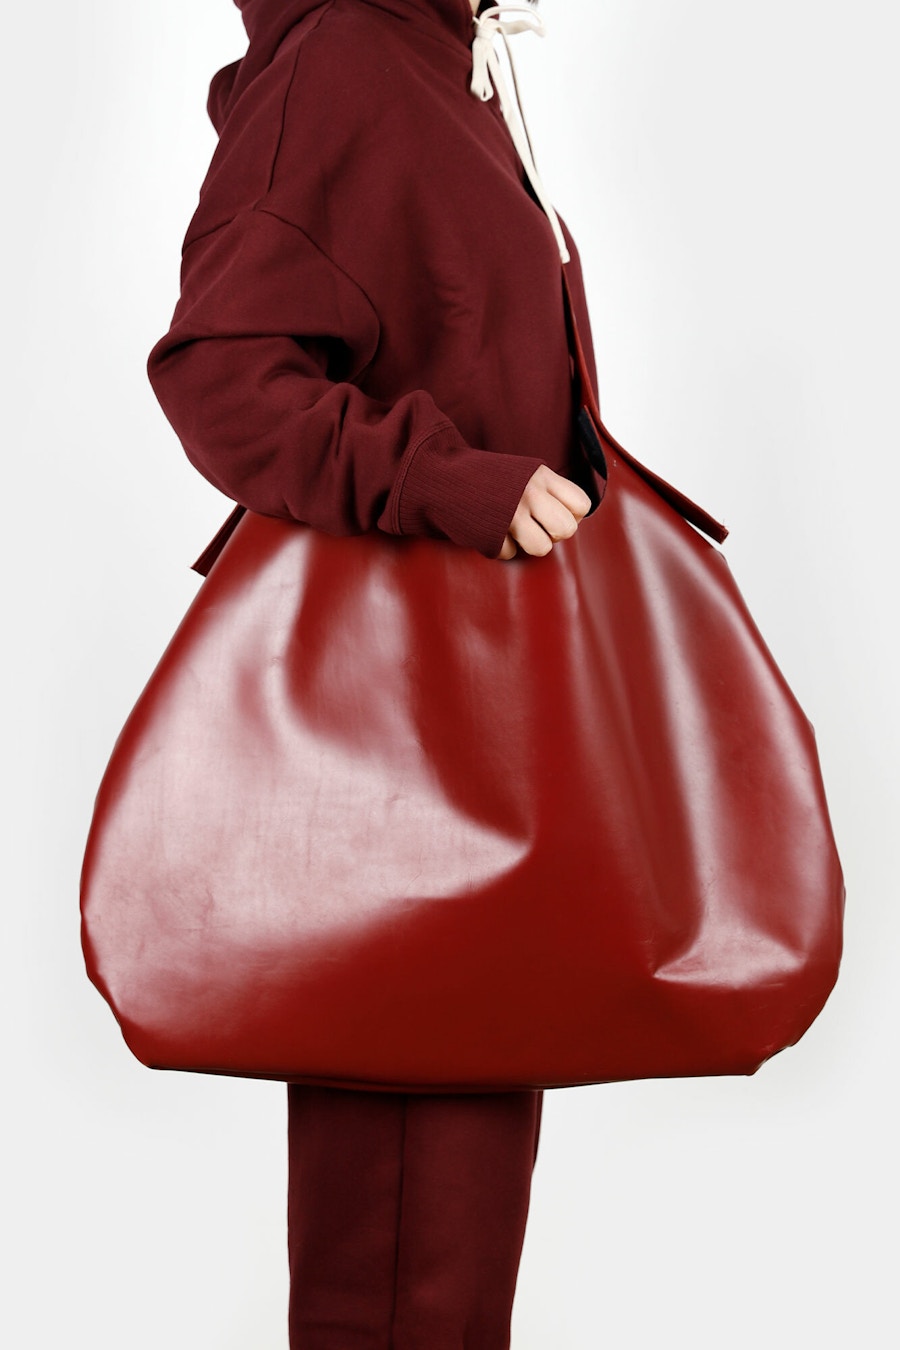 Big Red Handbag Side